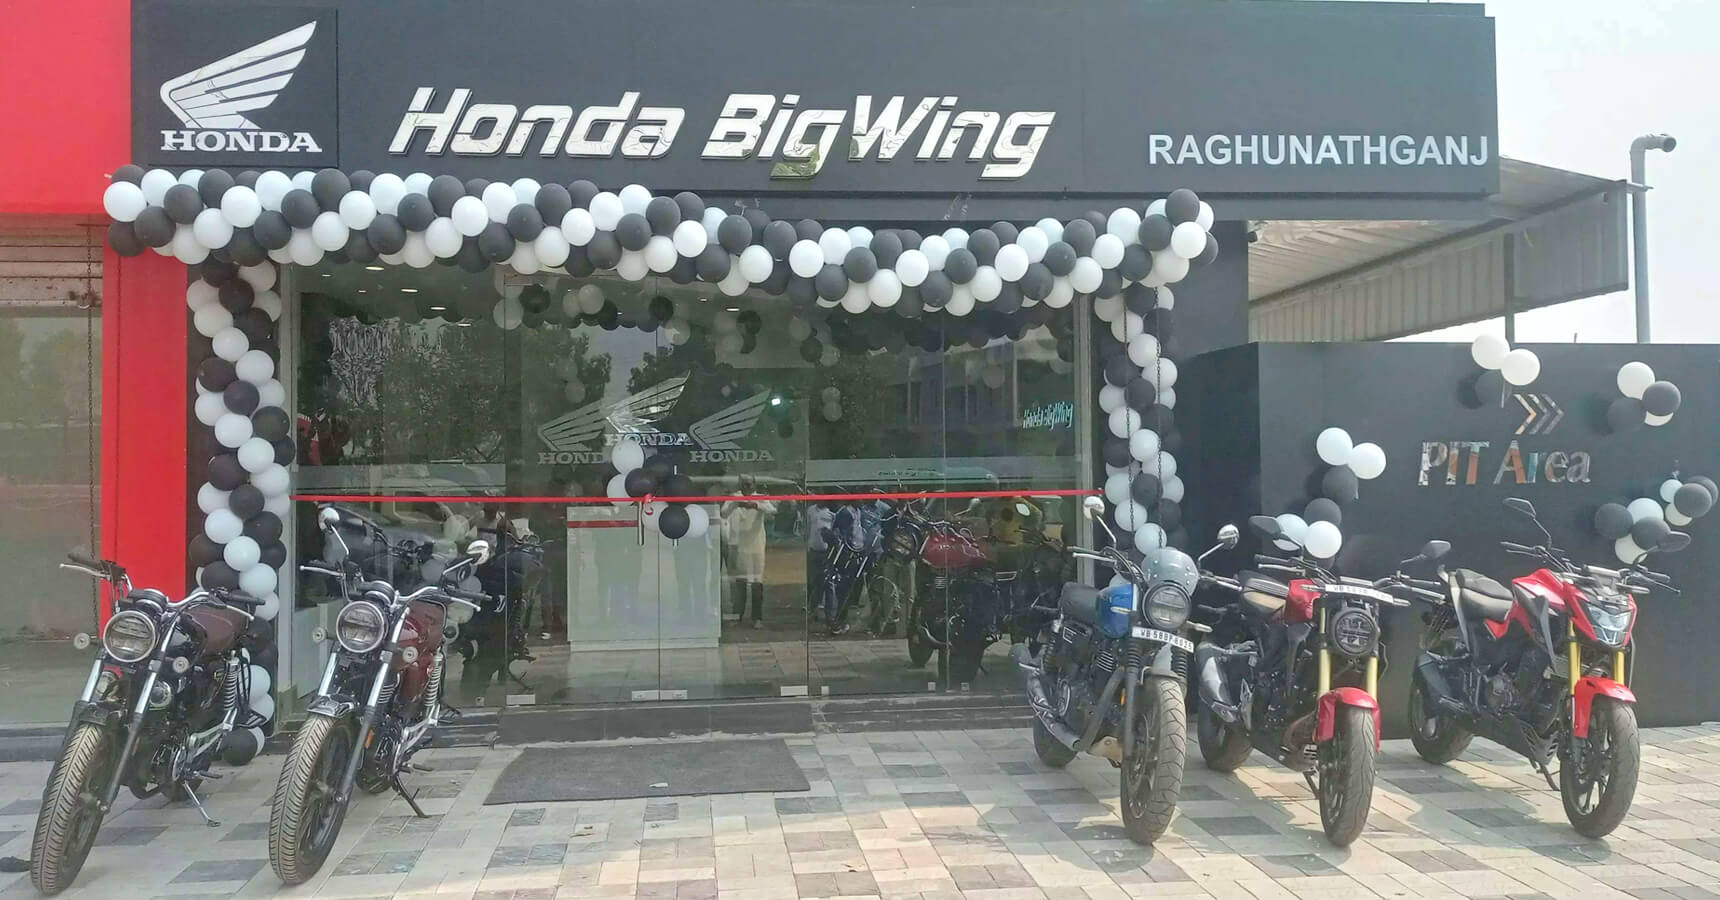 Honda India Opens New Bigwing Showroom